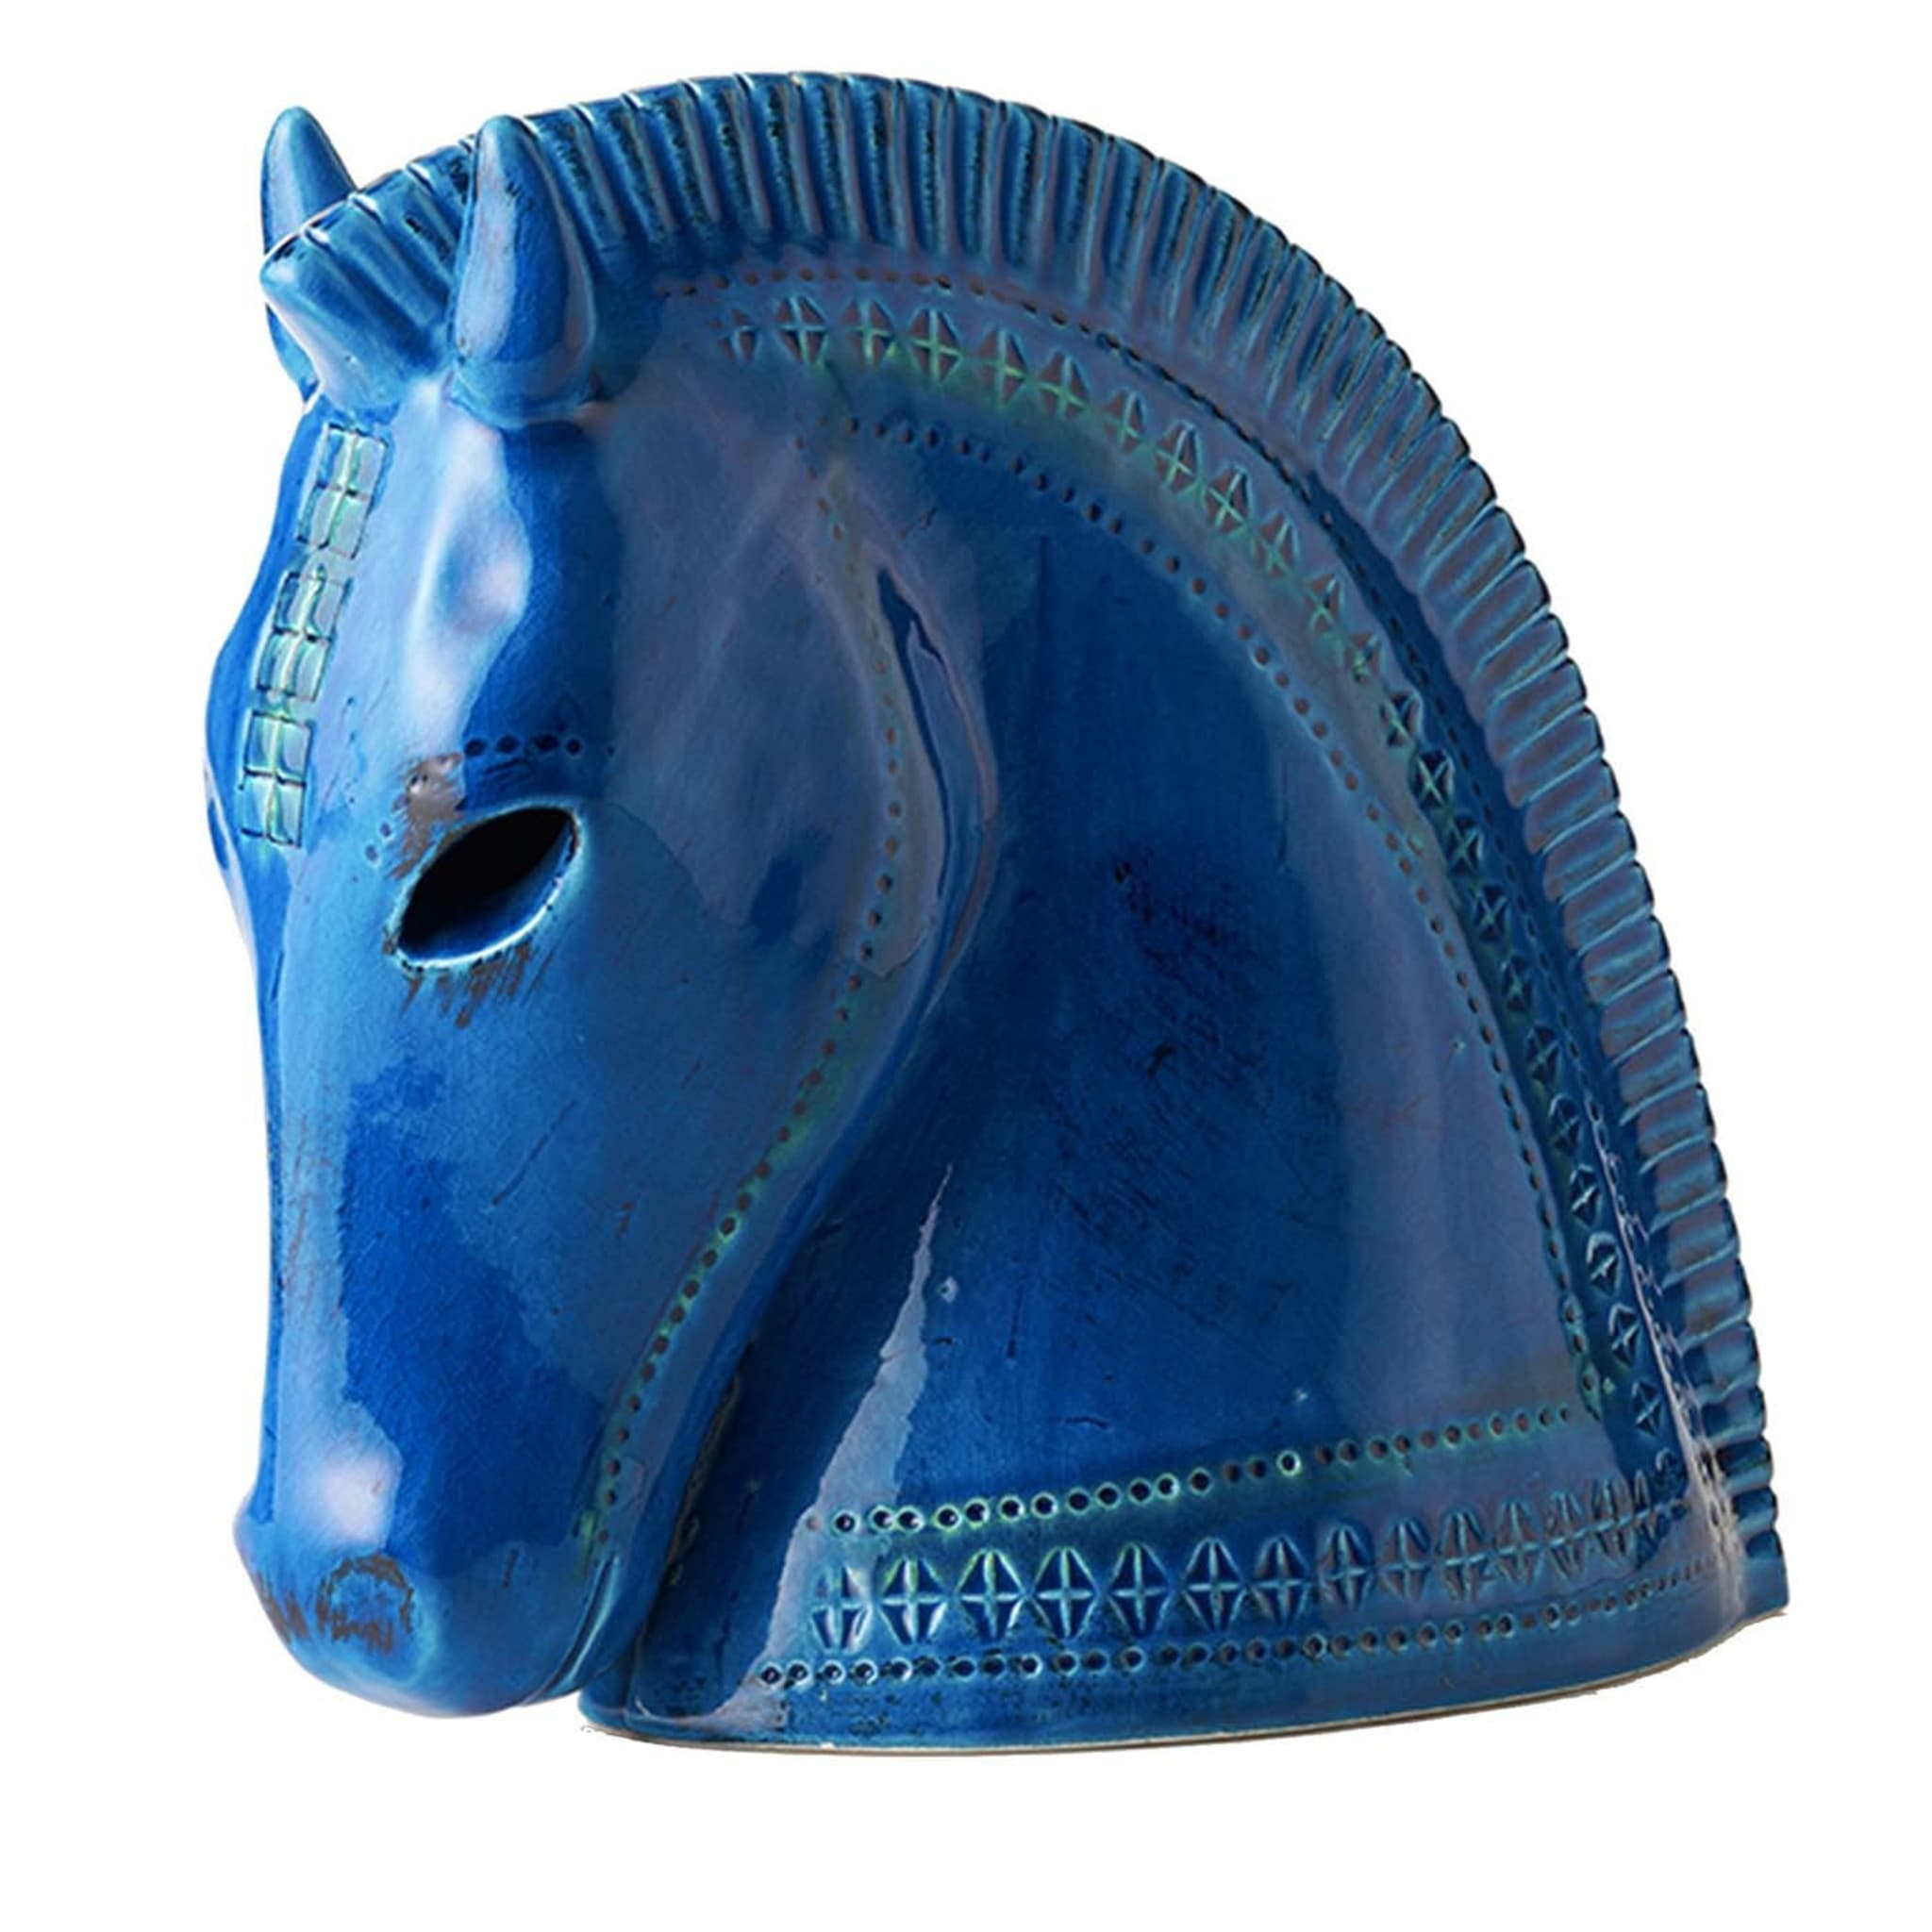 Rimini Blu Pferdekopf Figur von Aldo Londi - Hauptansicht